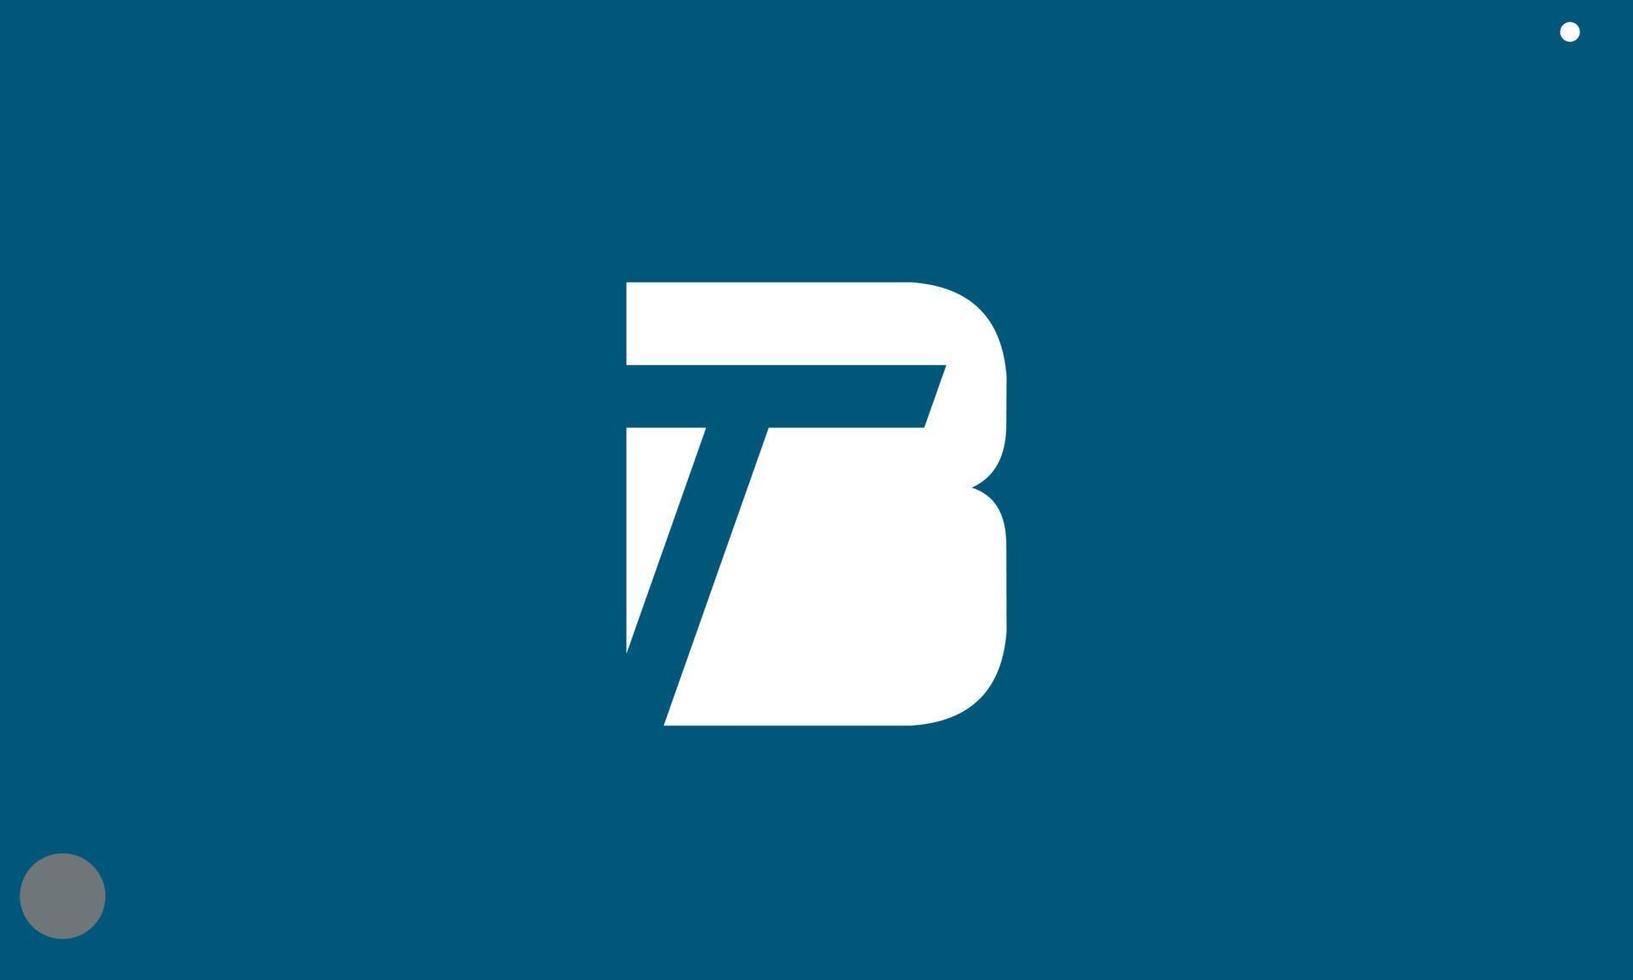 letras do alfabeto iniciais monograma logotipo tb, bt, t e b vetor